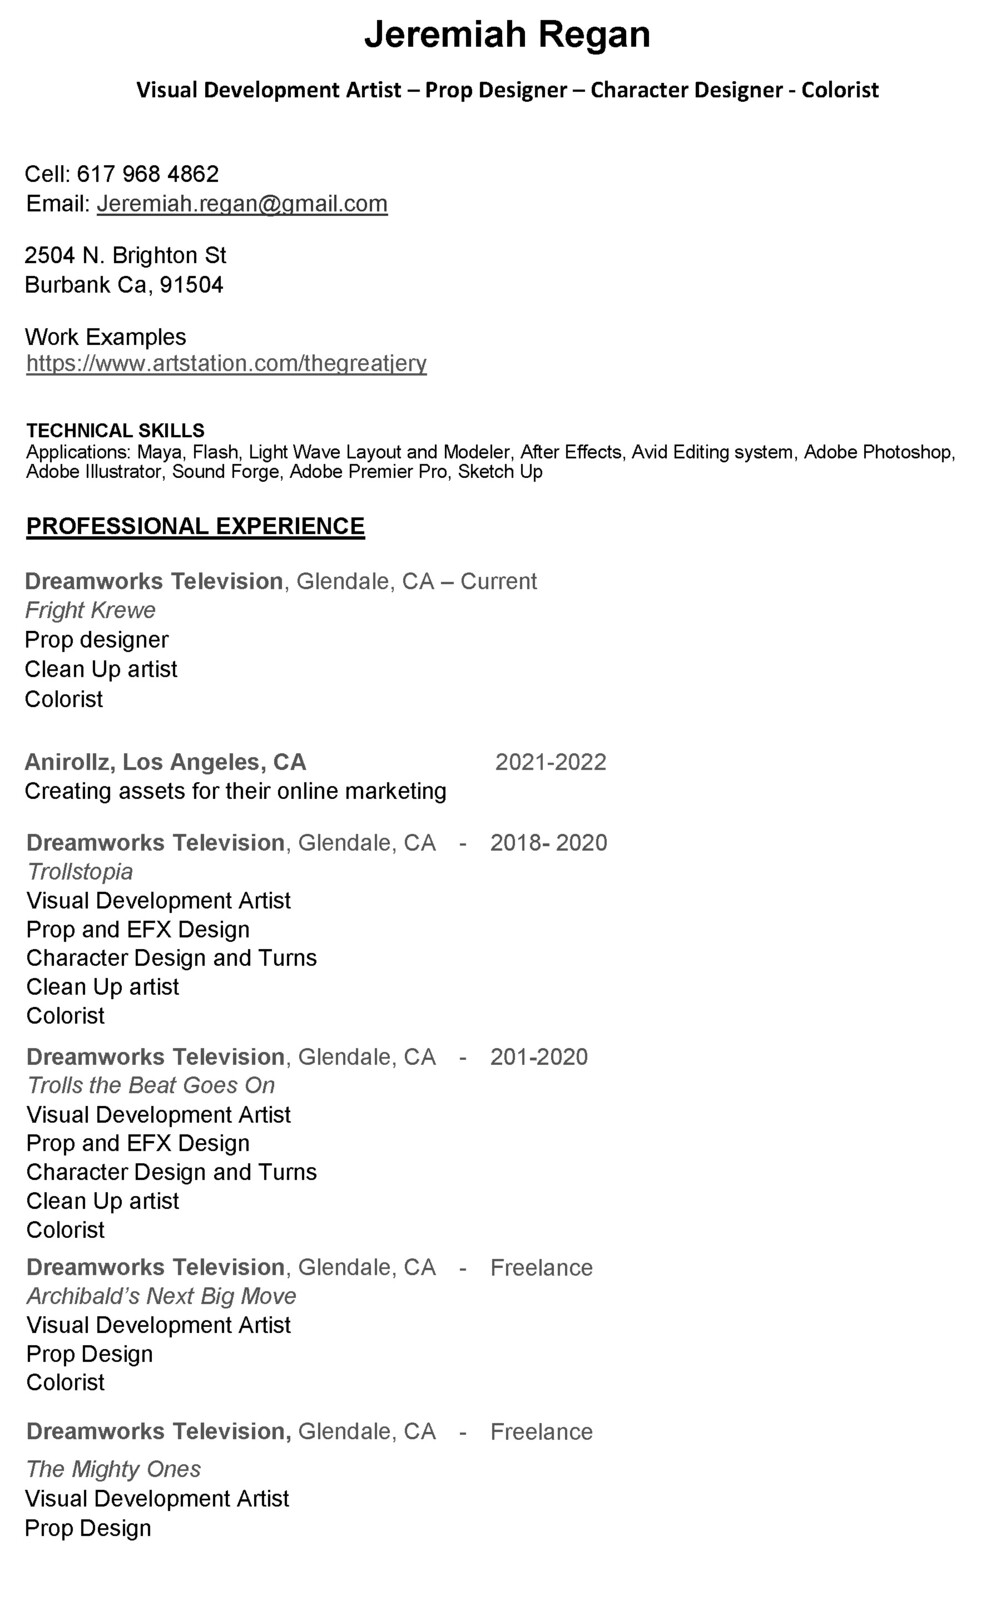 Jerry Regan - Resume Information 